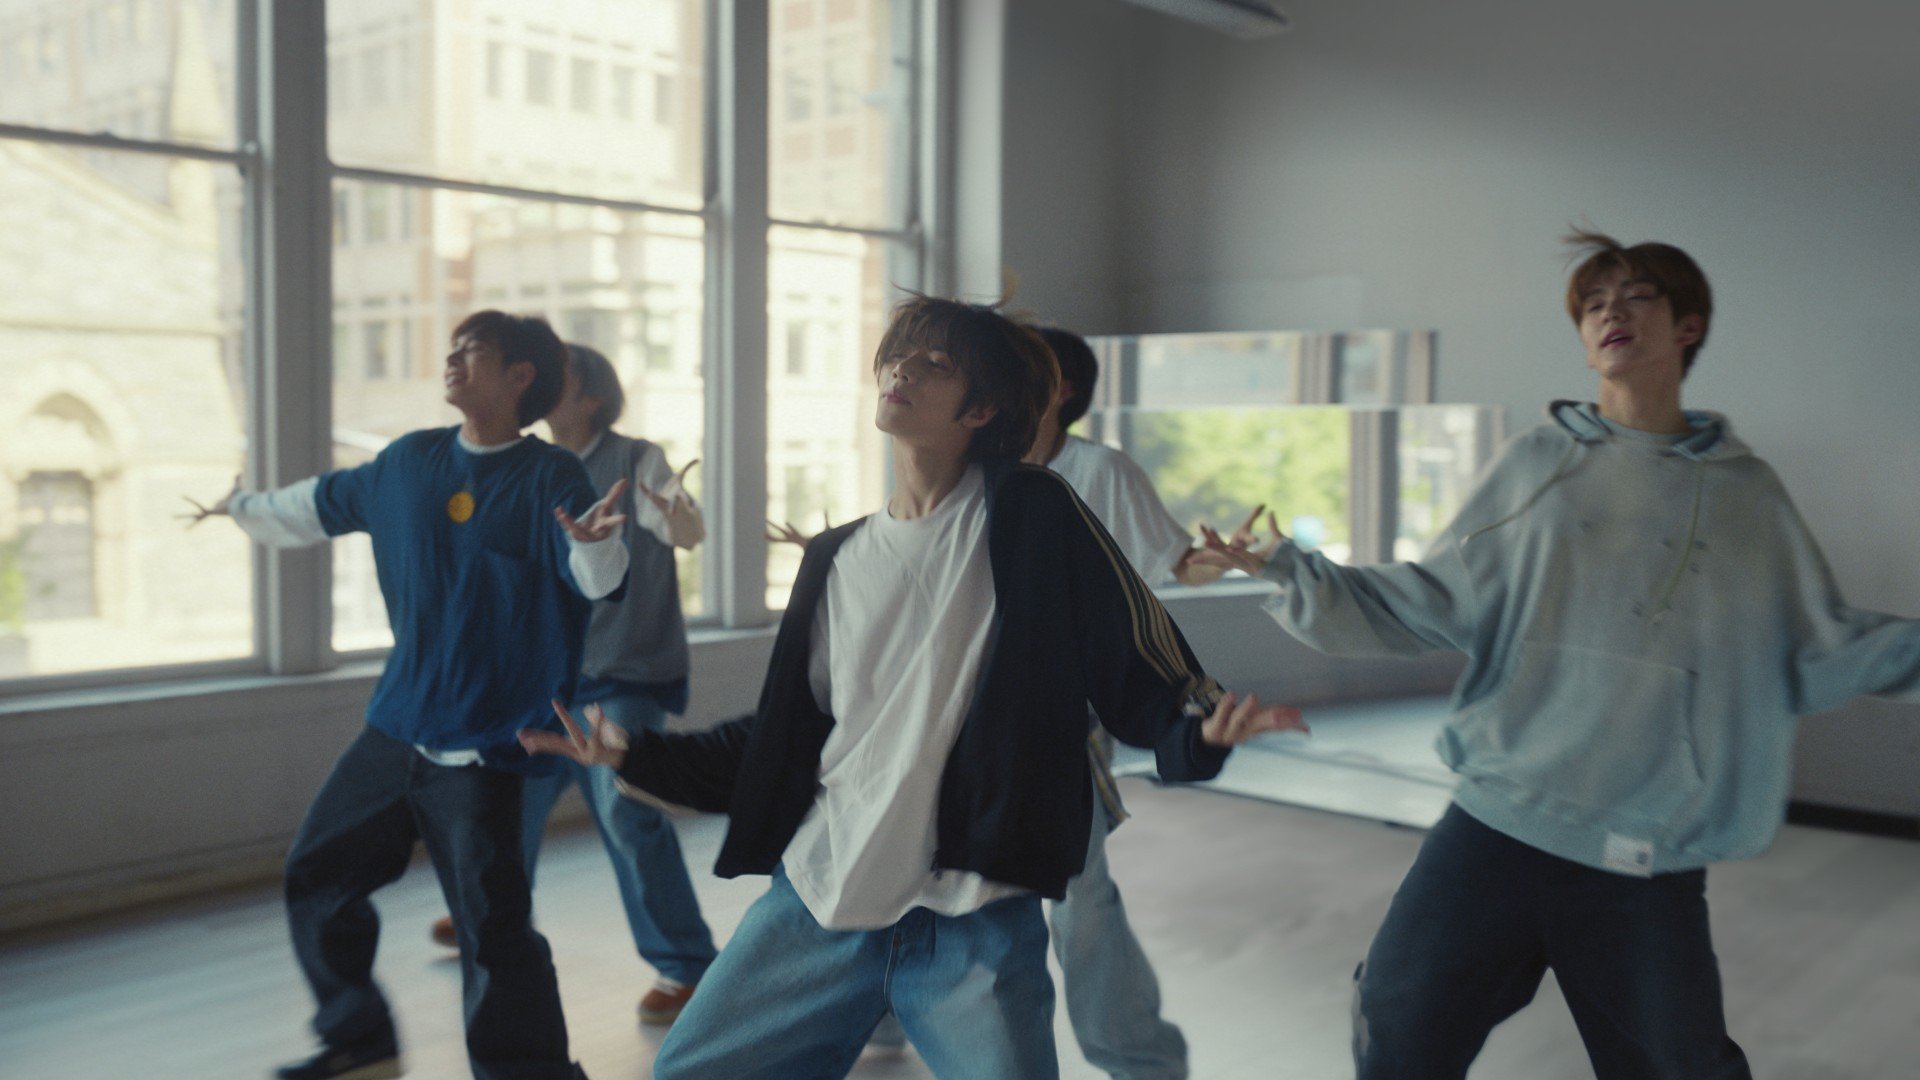 Samsung’dan Ünlü K-pop Grubu TOMORROW X TOGETHER’ın Yorumuyla Galaxy Şarkısı: “Open Always Wins”